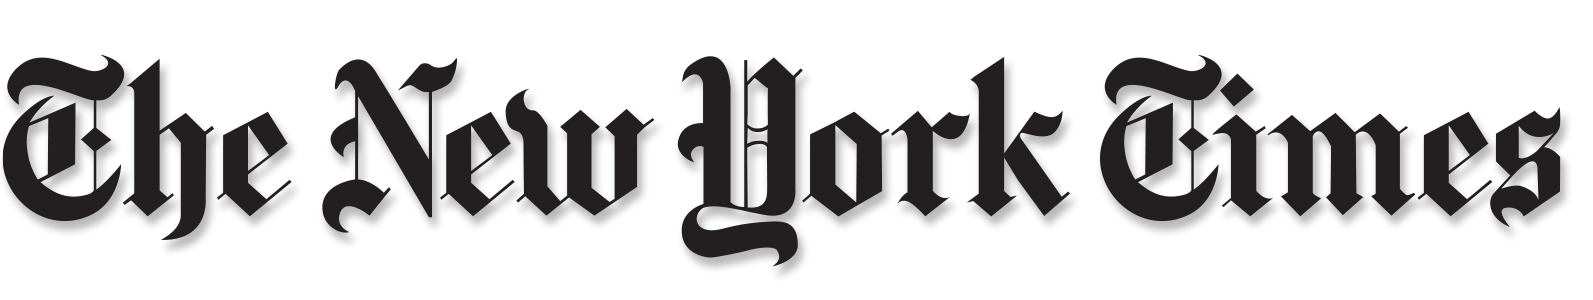 The-New-York-Times-logo-web-2